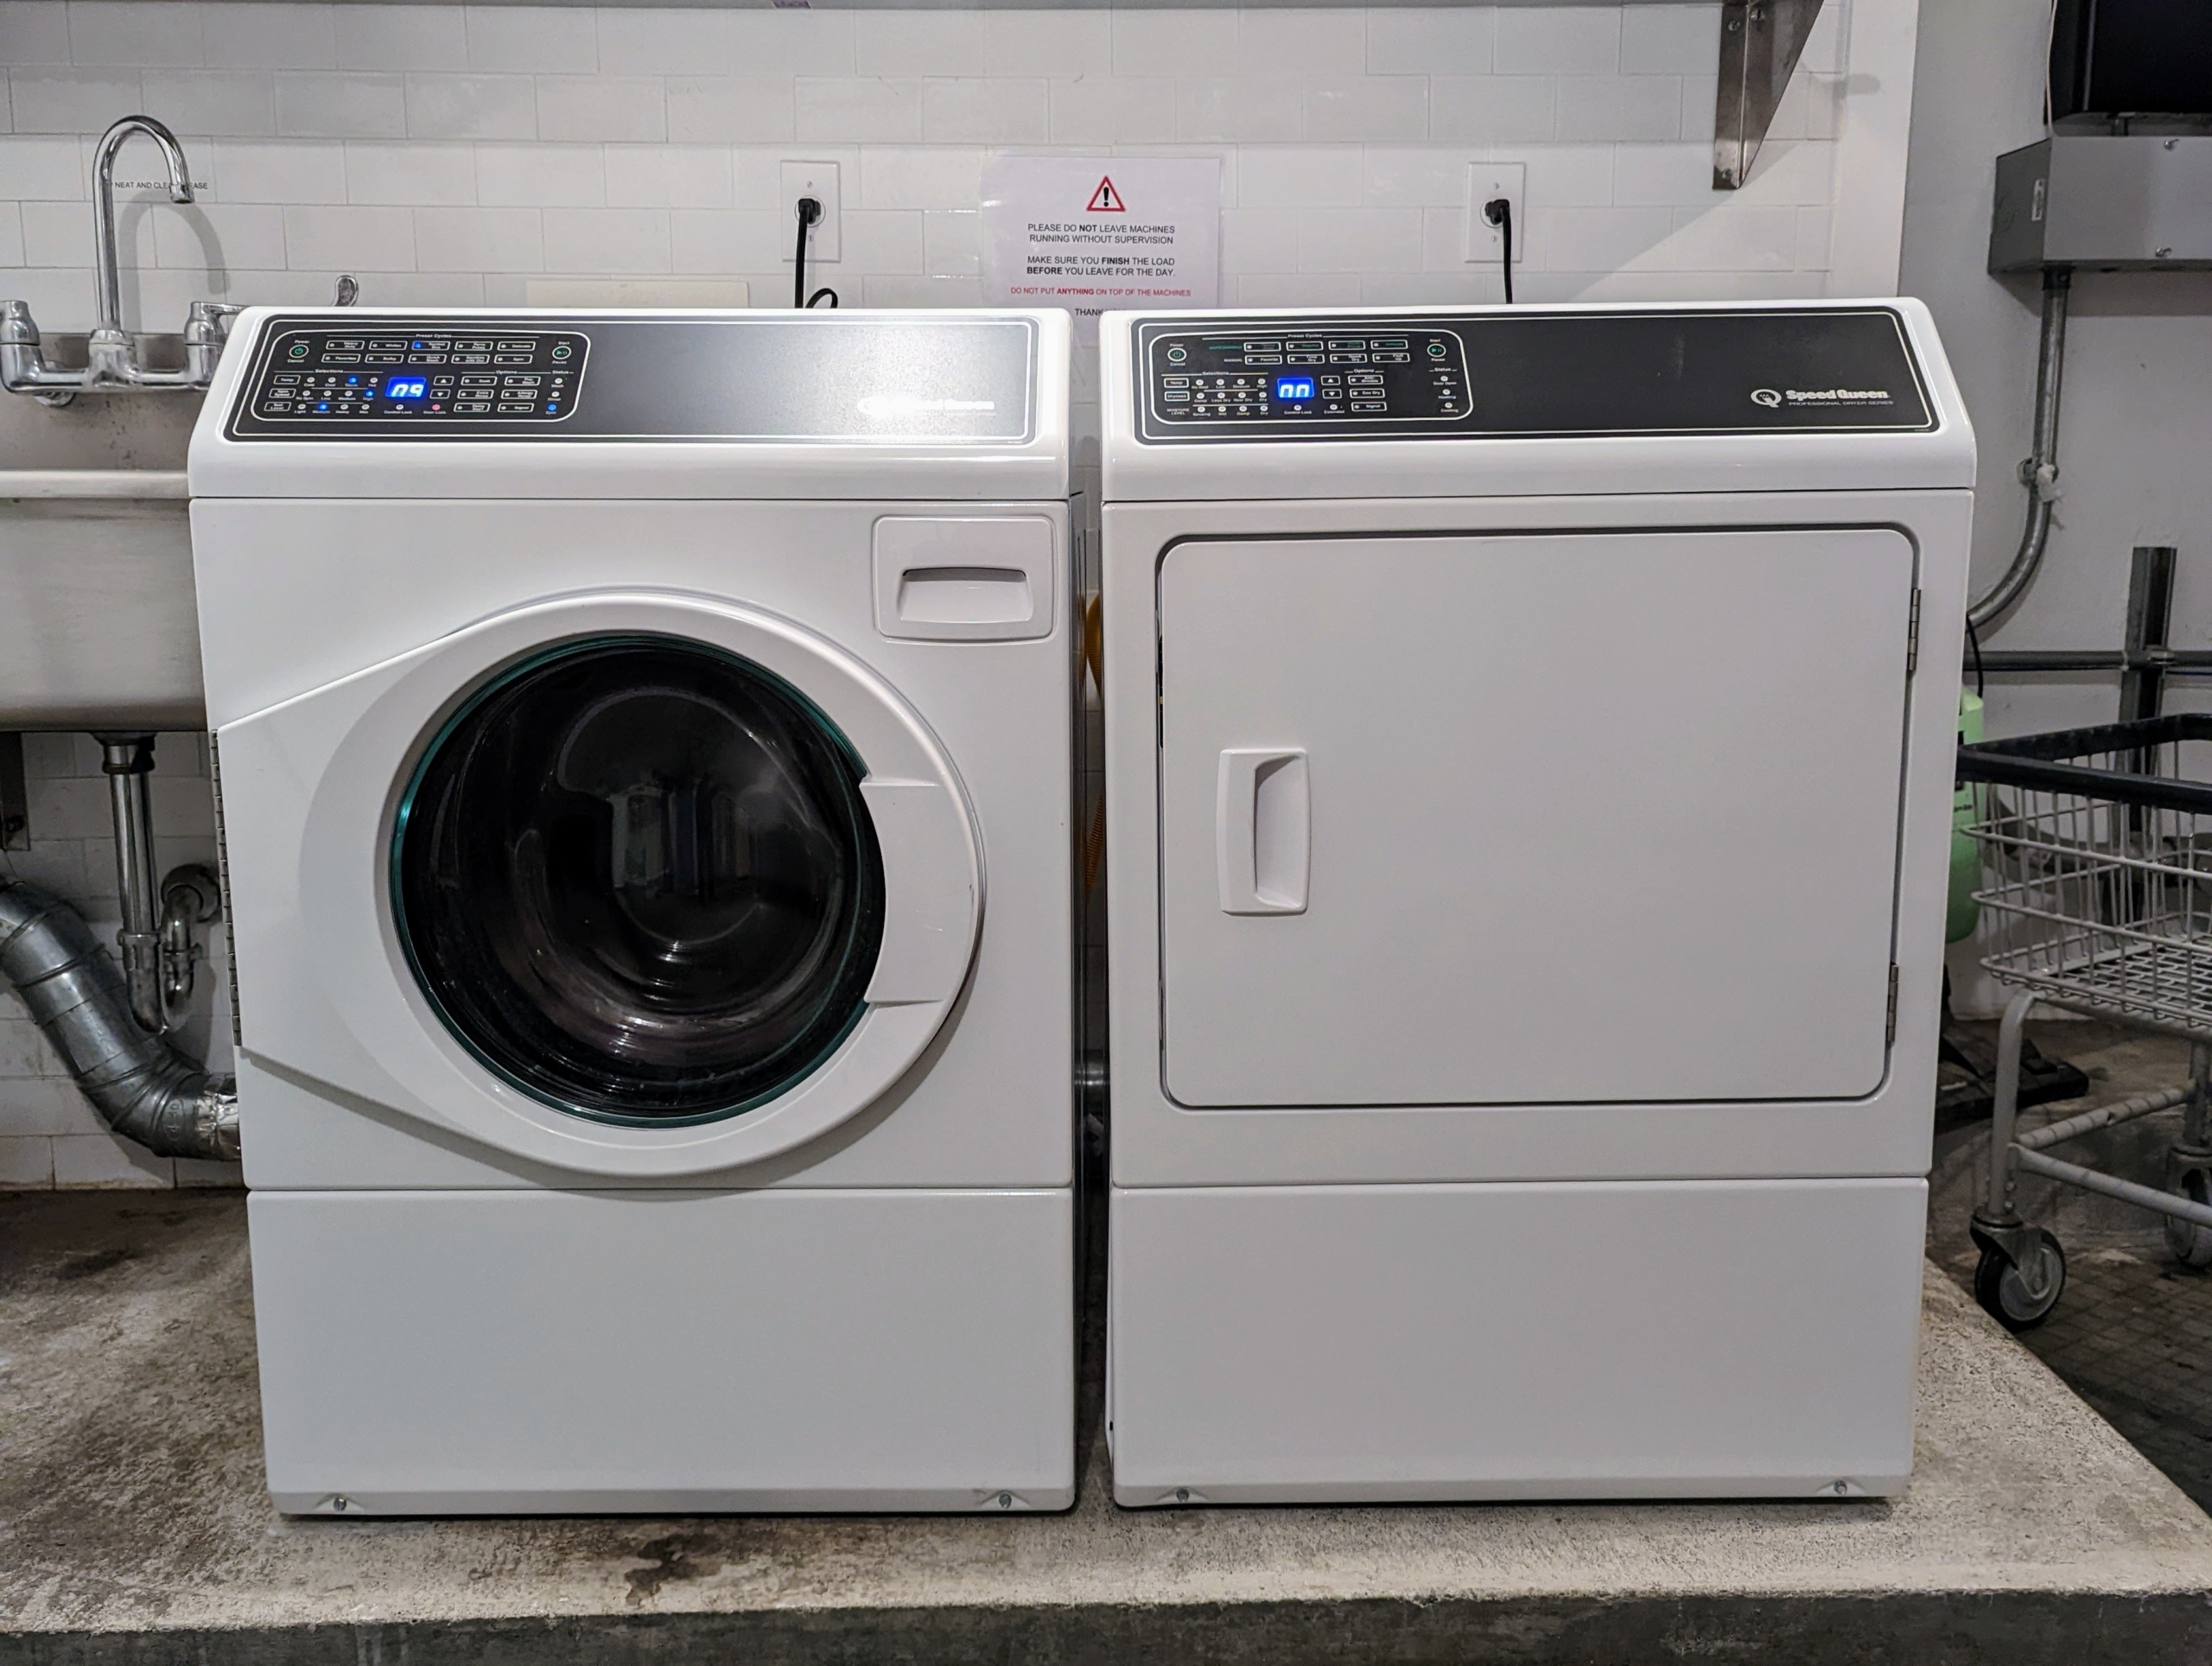 Using My New Speed Queen Washer and Dryer - The Martha Stewart Blog